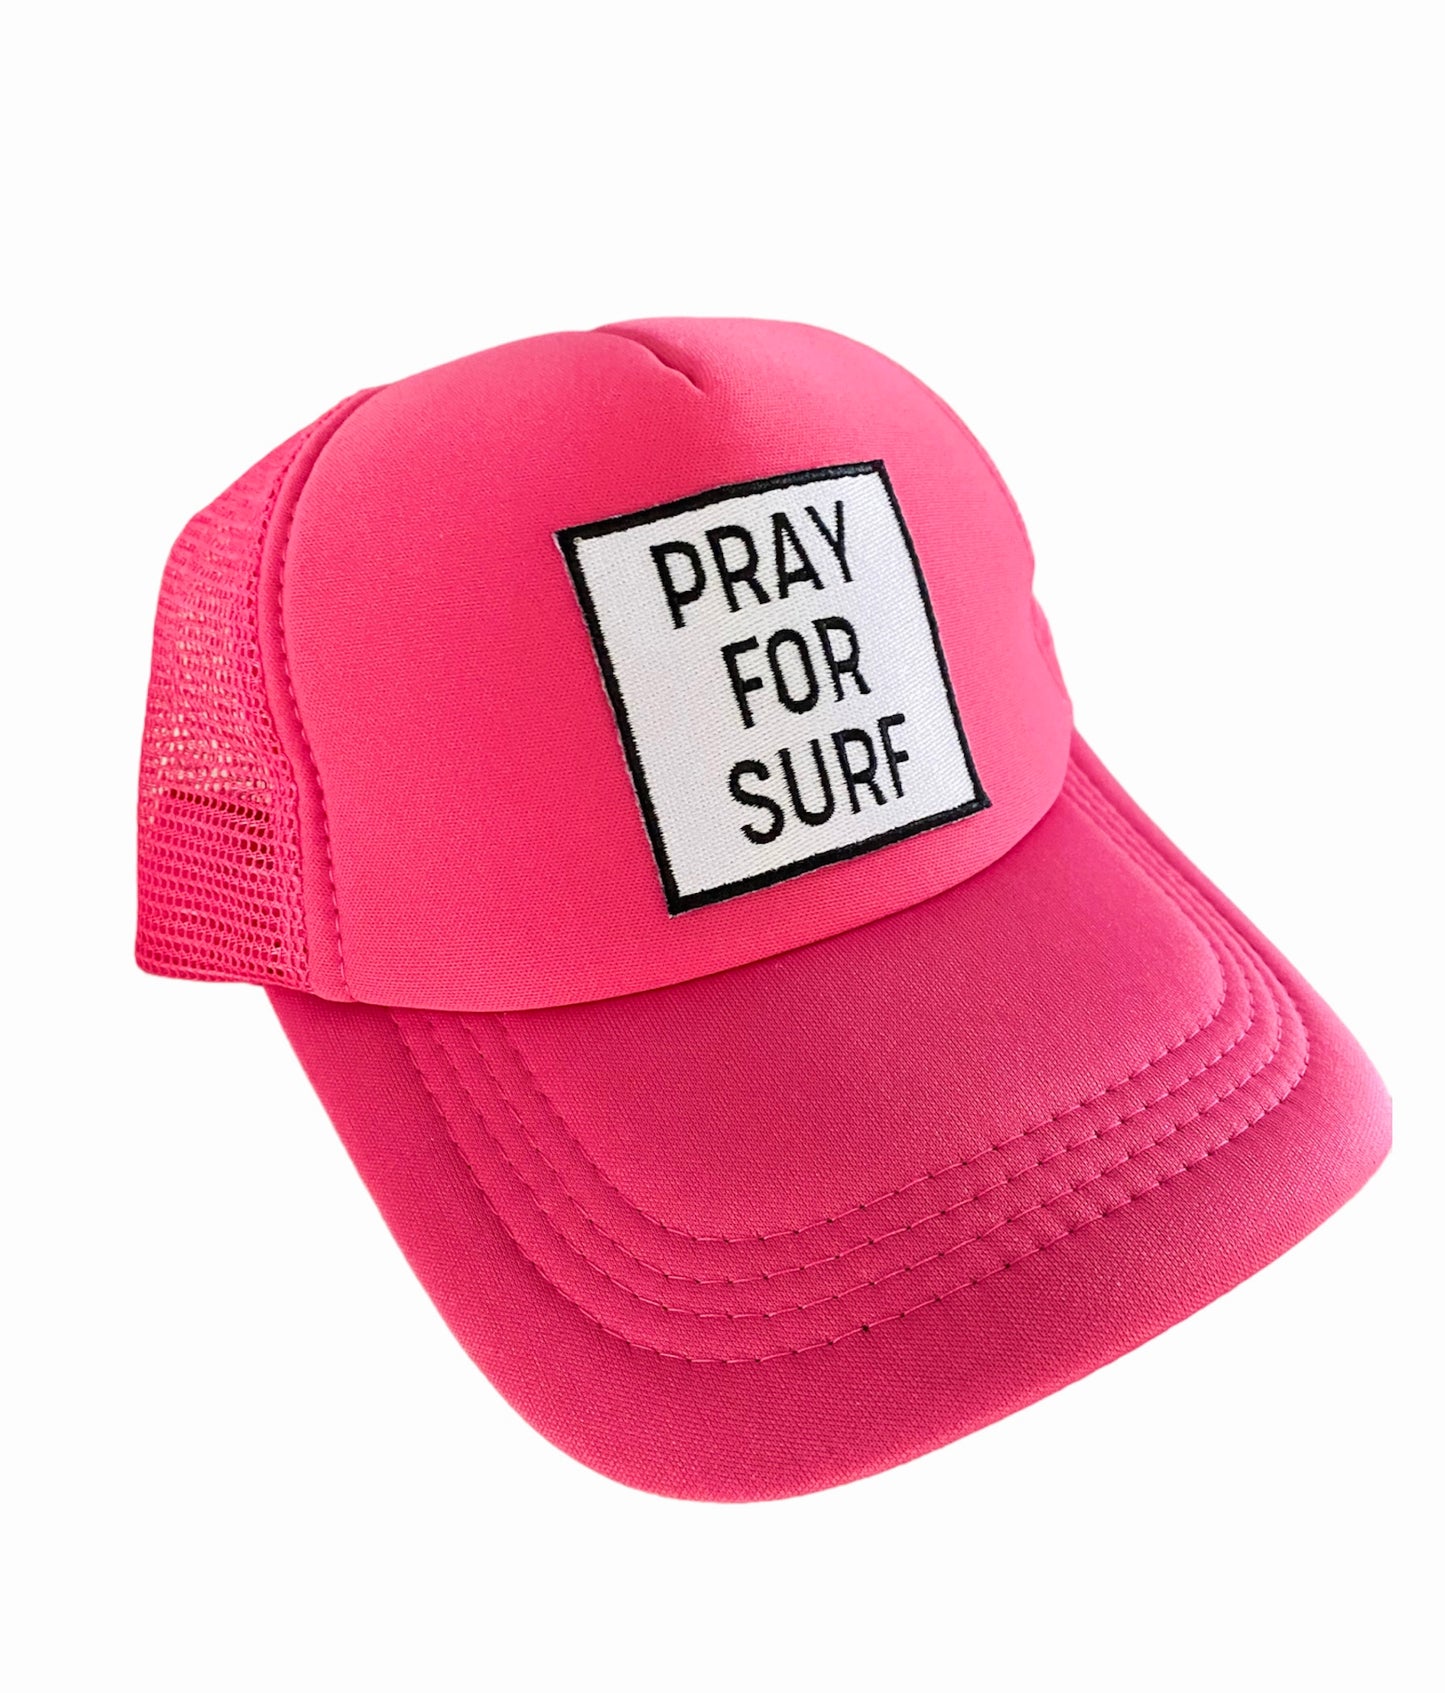 Pray for Surf Hat